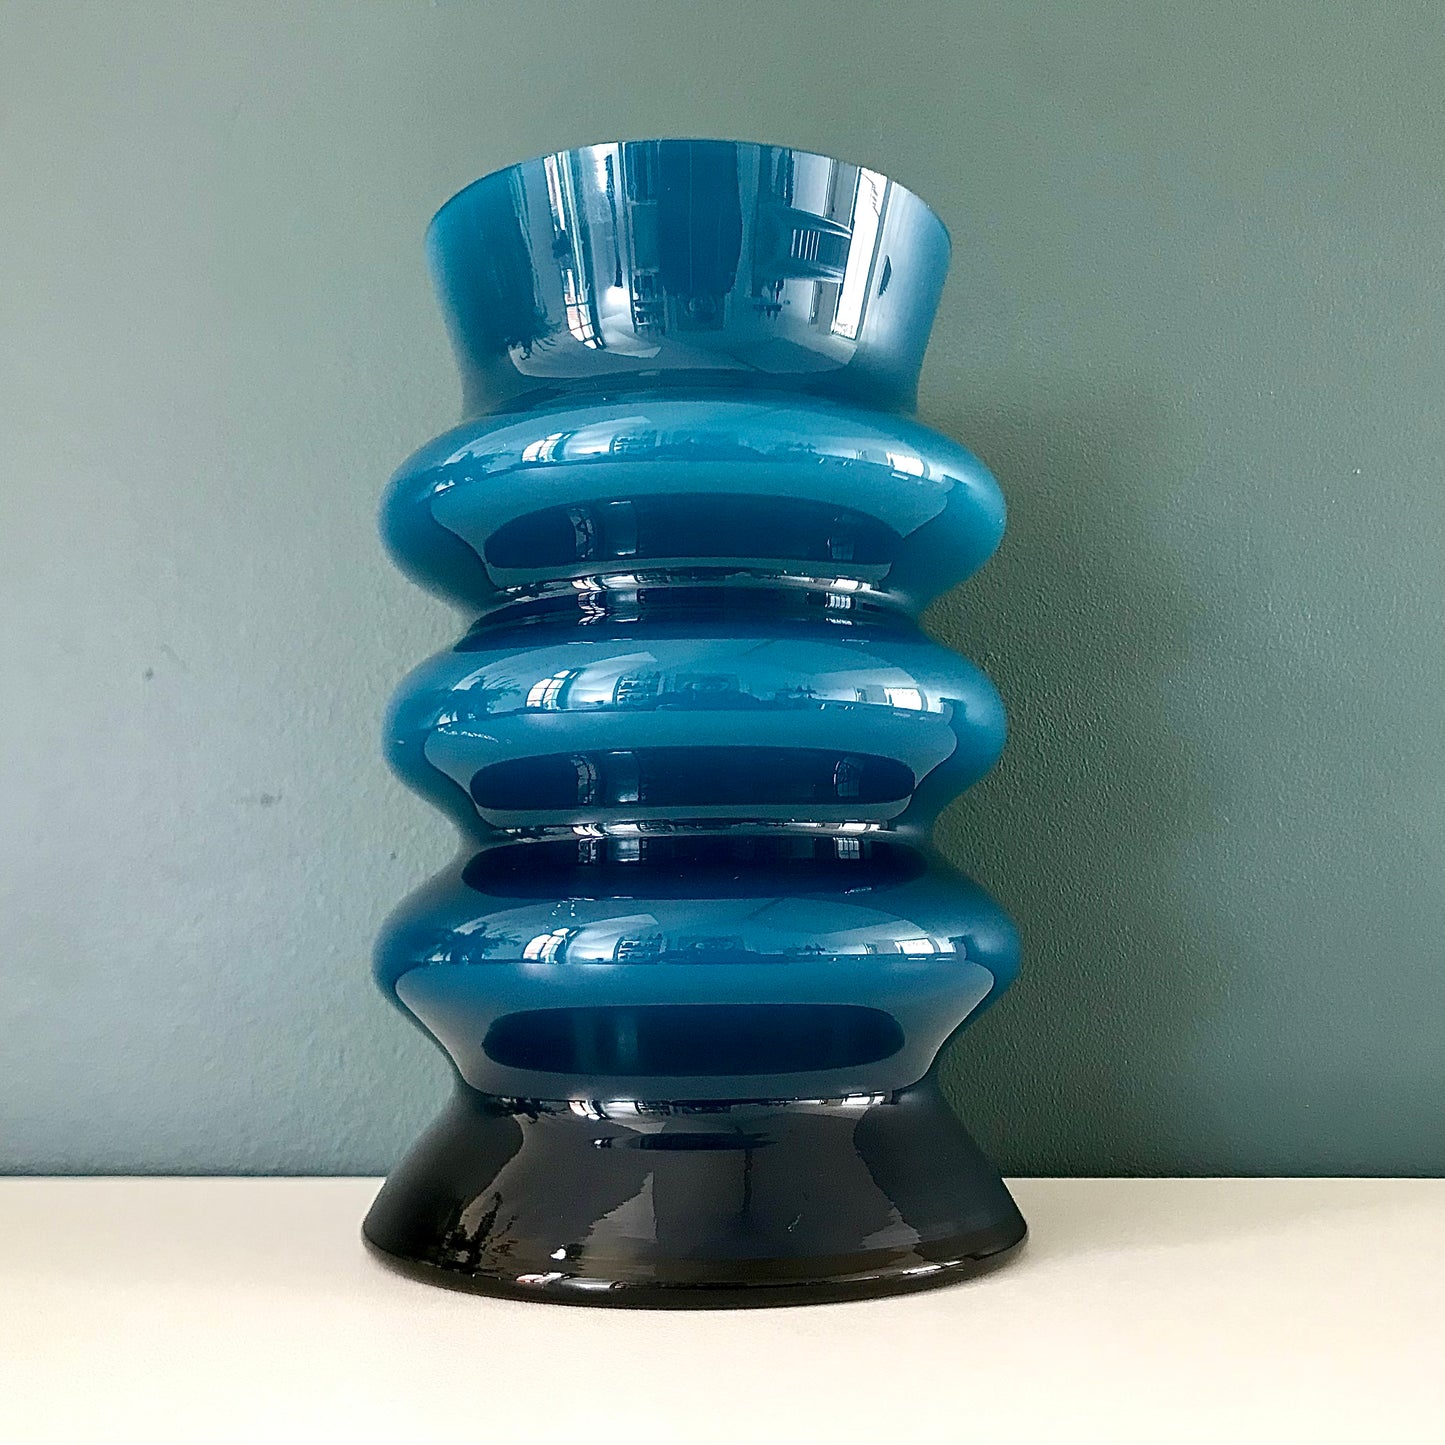 Aseda Swedish Blue Hooped Glass Vase Petrol Turquoise 1960s 1970s Retro